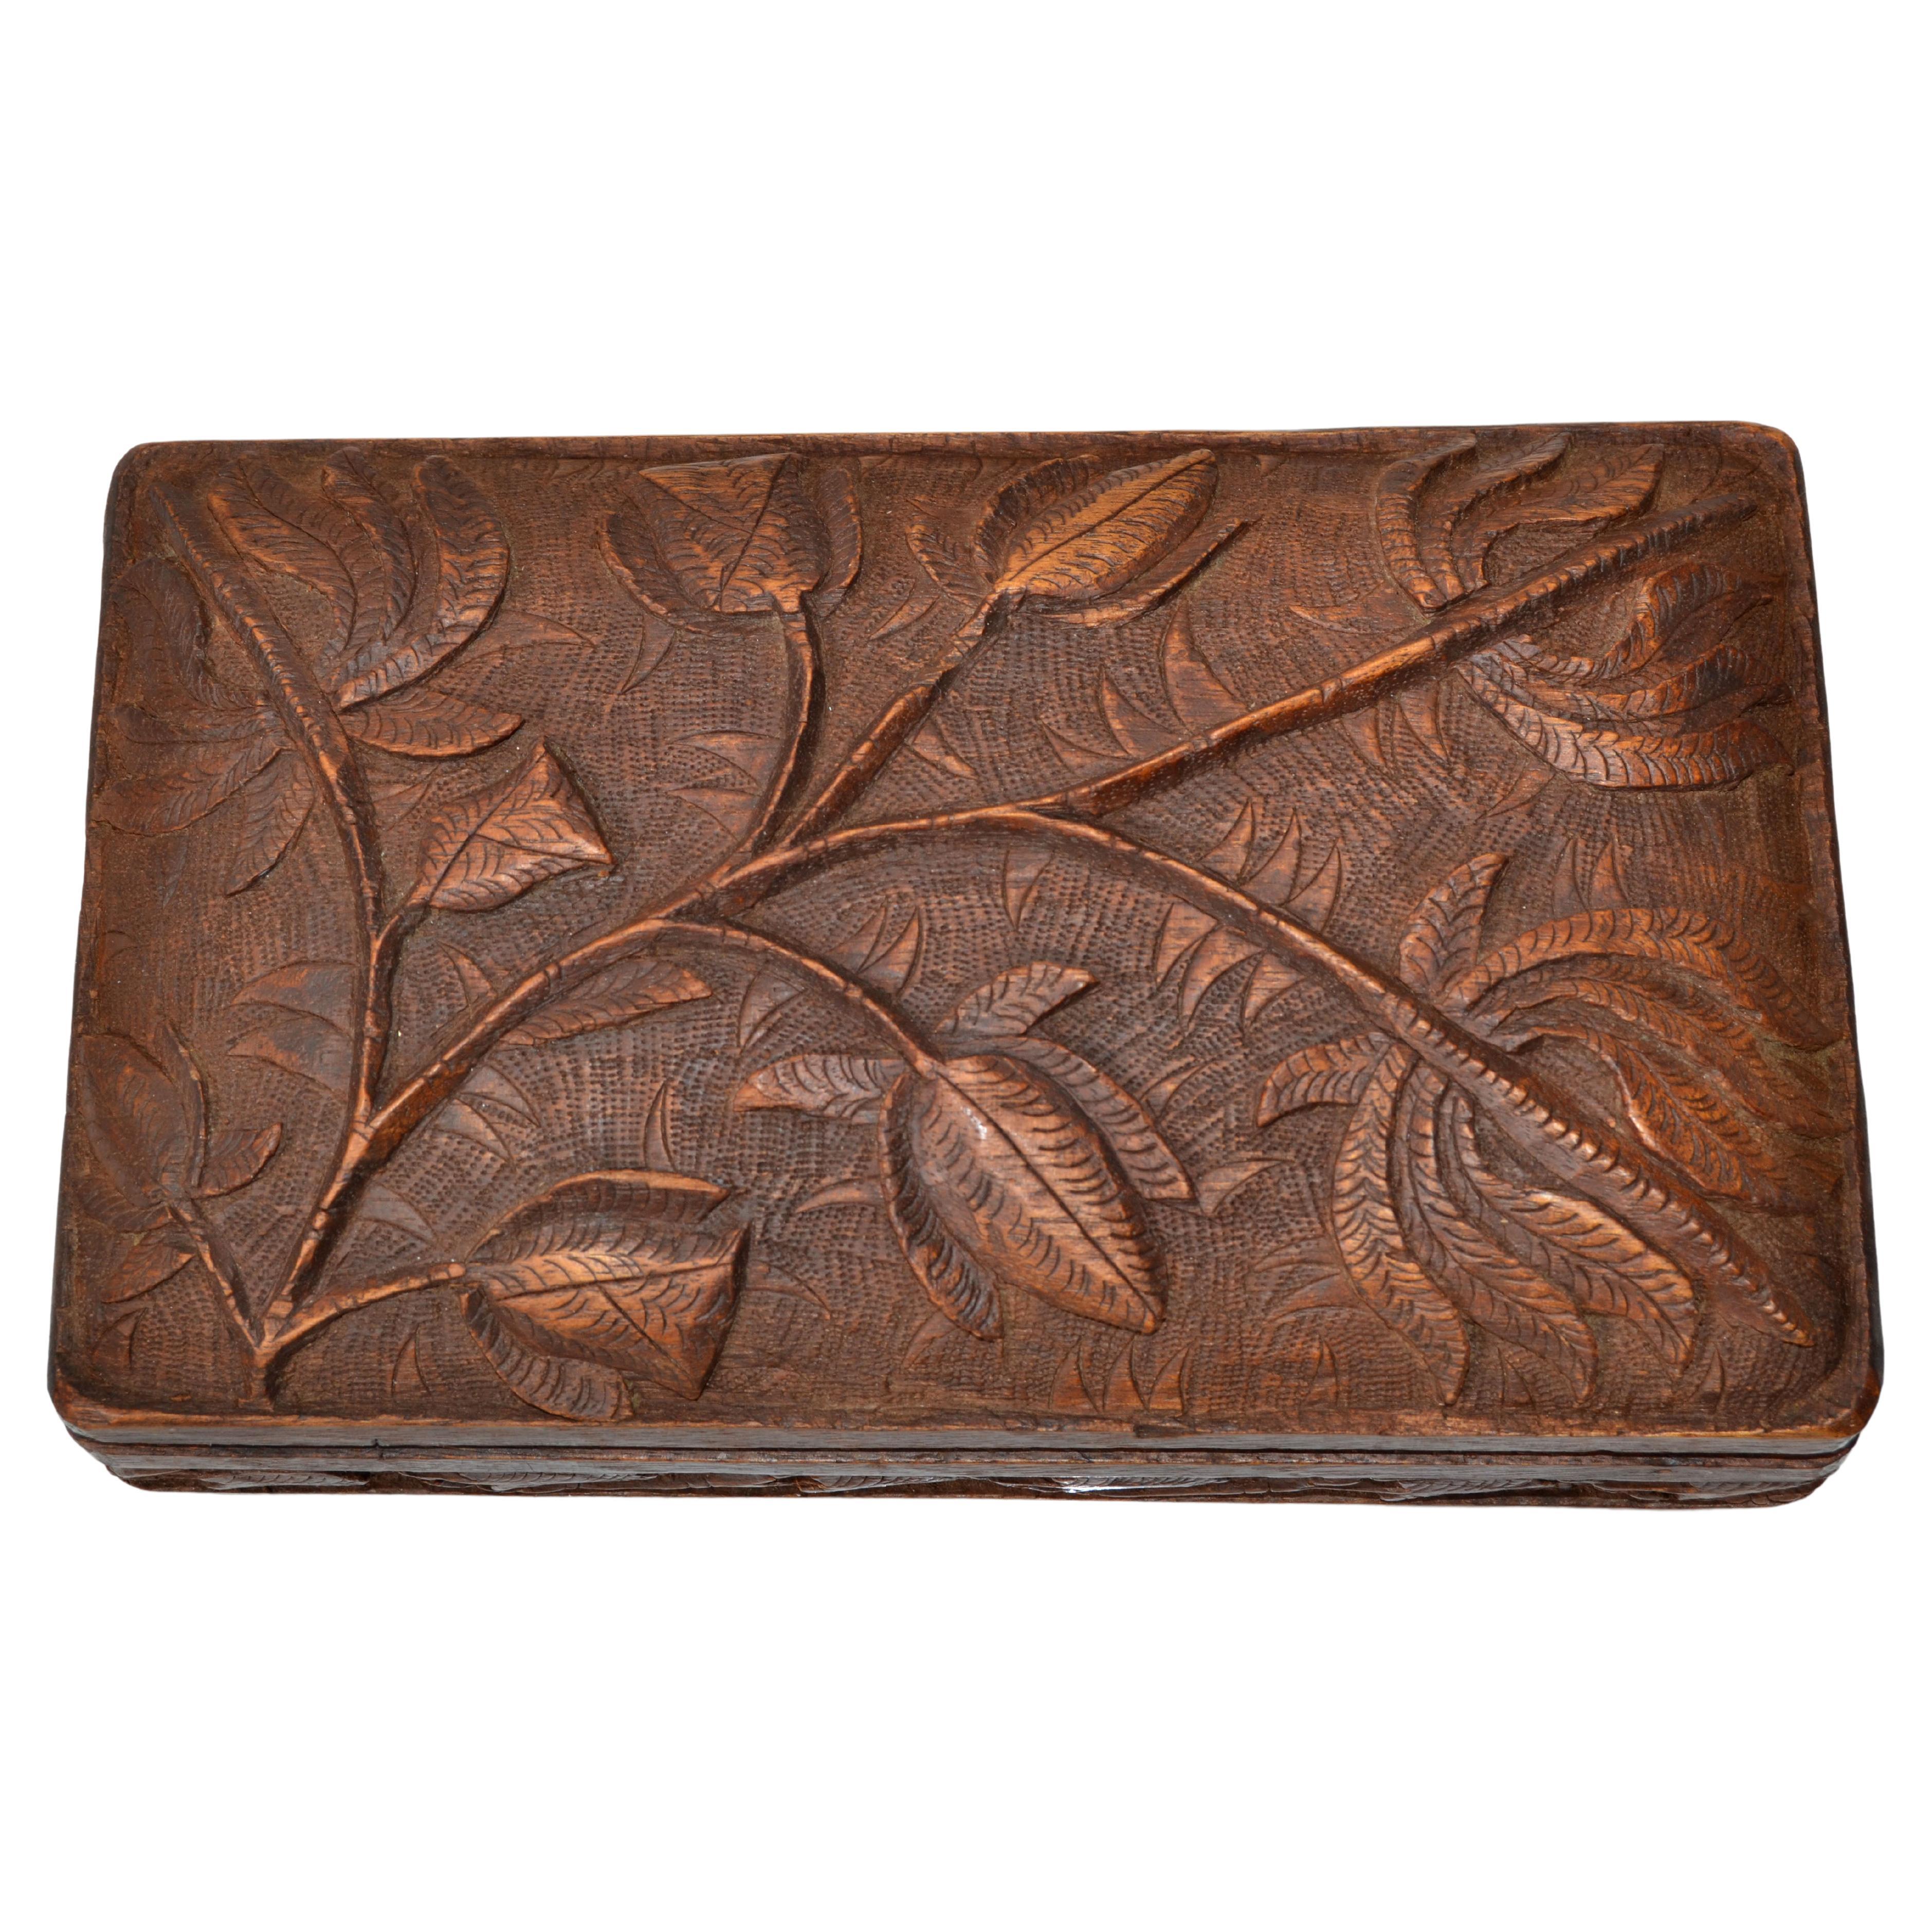 Vintage Handcrafted and Carved Wood Box Leaf Motif, Jewelry Box, Keepsake Box